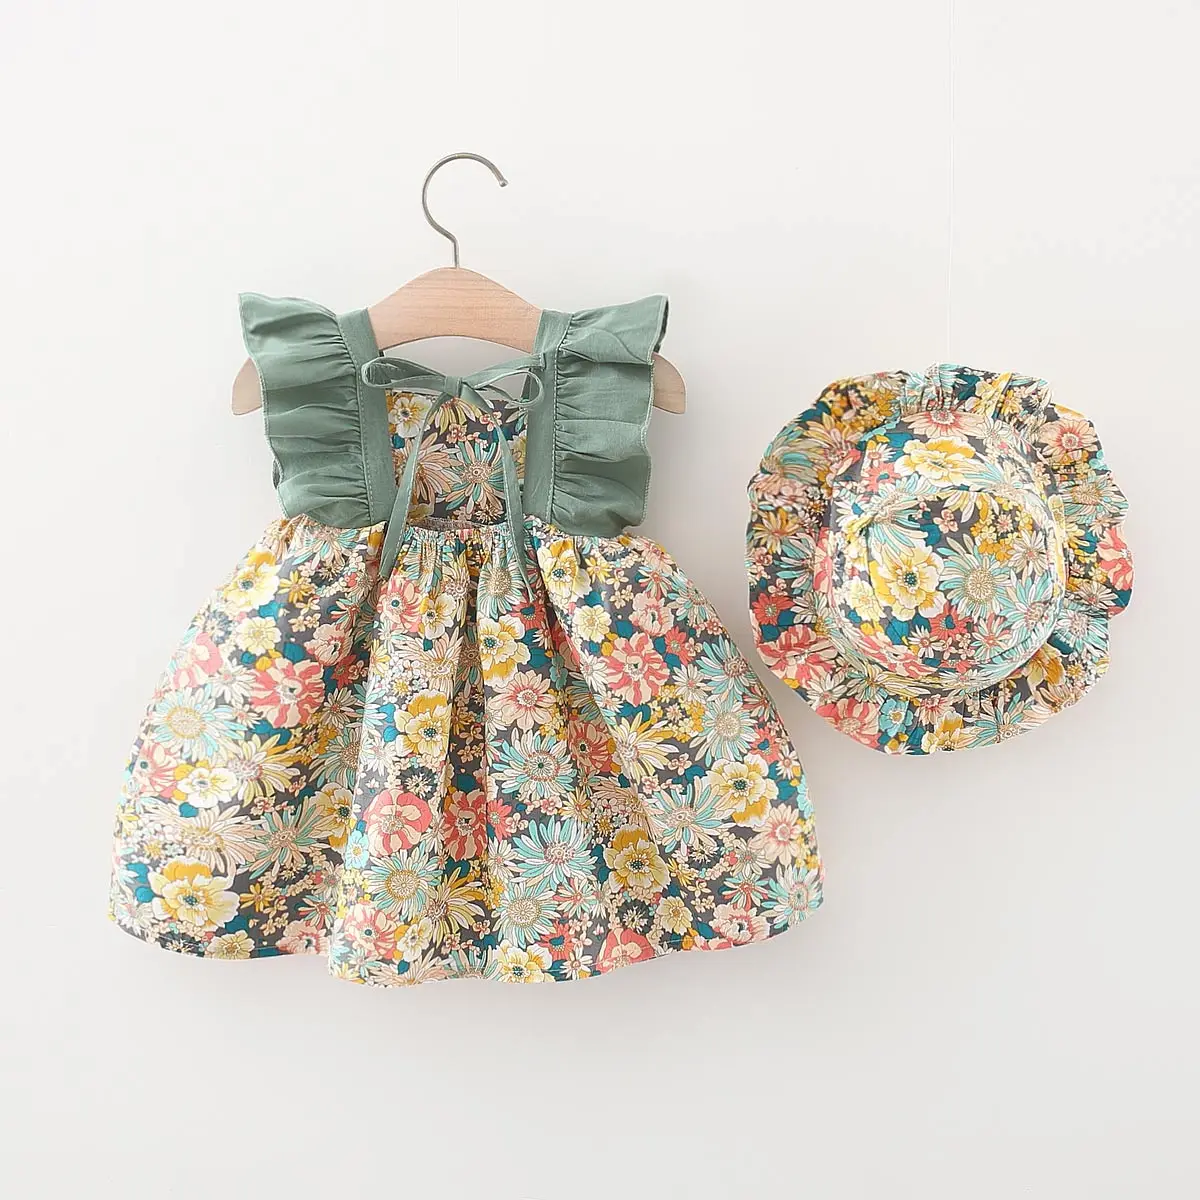 polka dot dress hibobi Summer Toddler Girl Clothes Baby Dresses Cute Bow Plaid Sleeveless Cotton Floral Pattern Princess Dress+Sunhat Dresses for babies